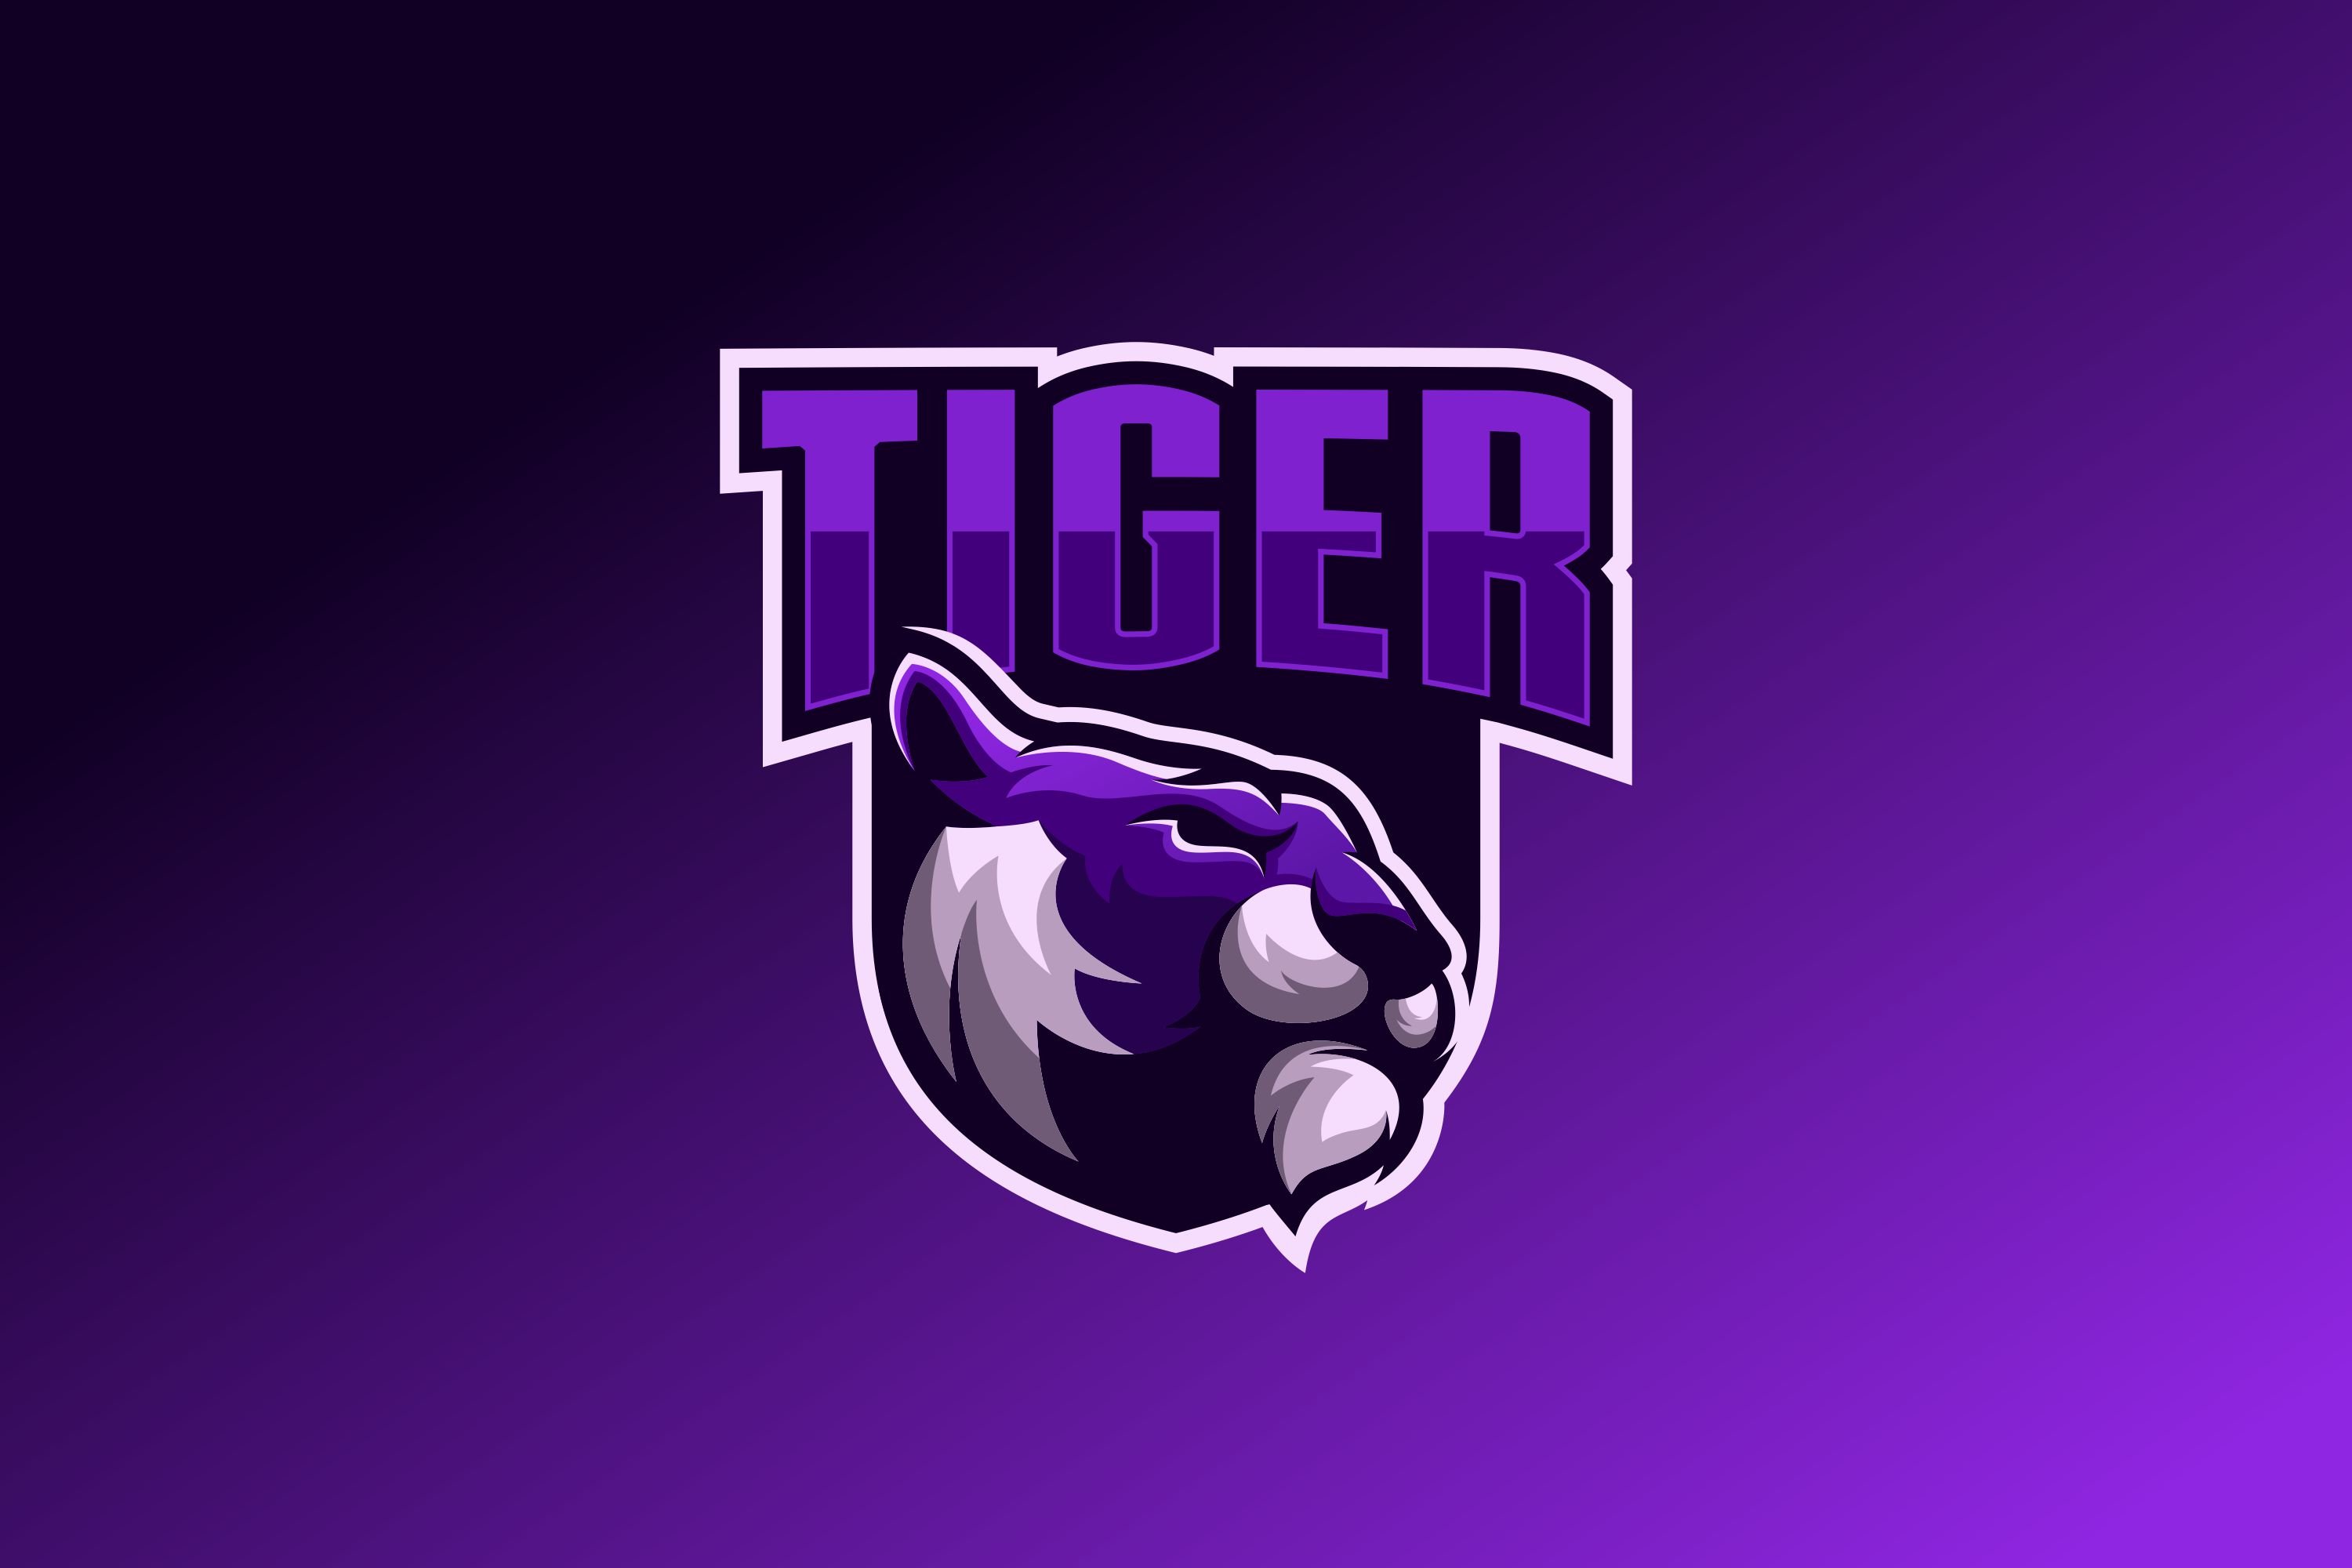 tiger logo cover image.